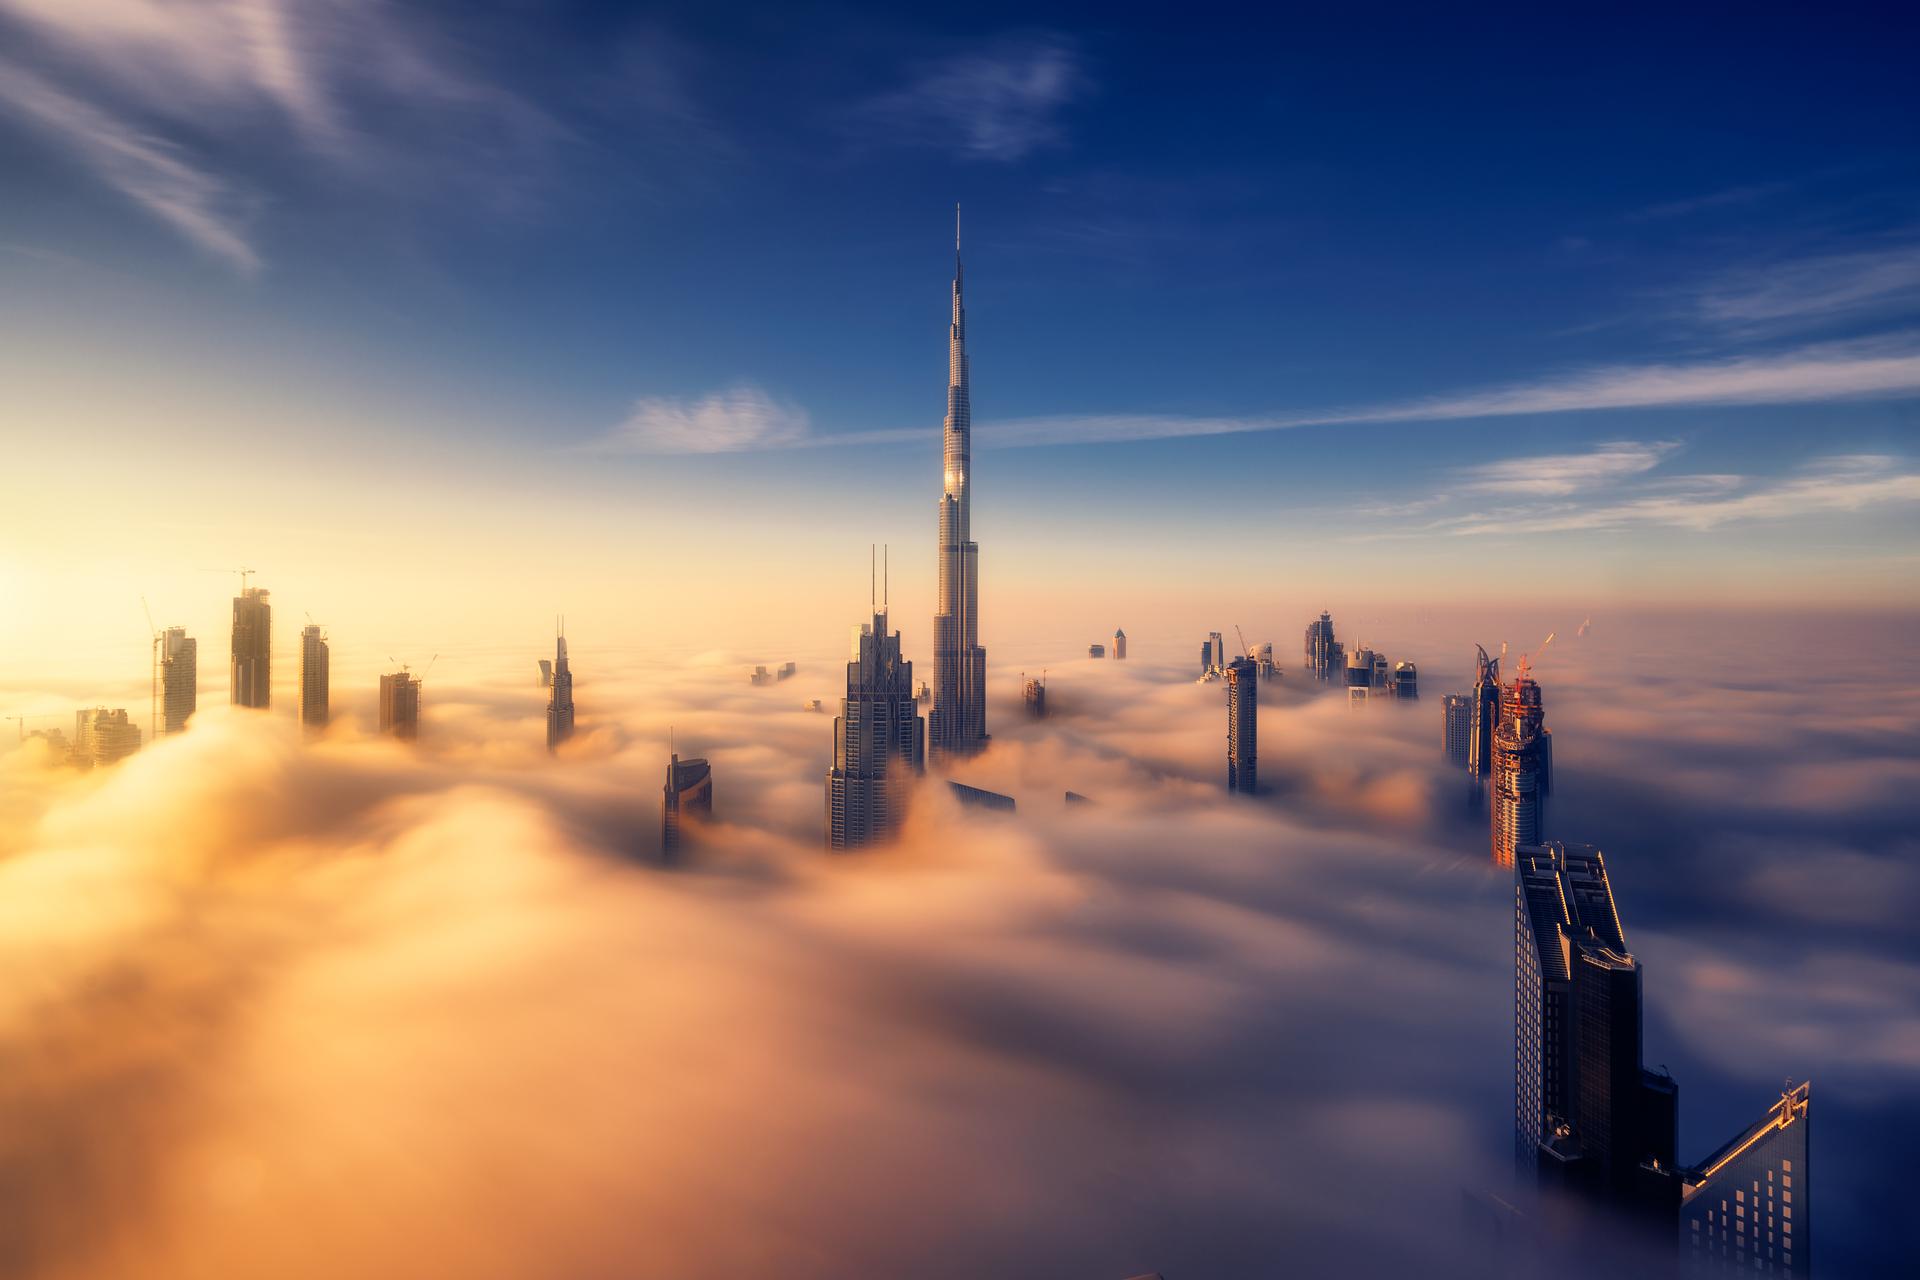 The Dubai Fog by Rustam.visual